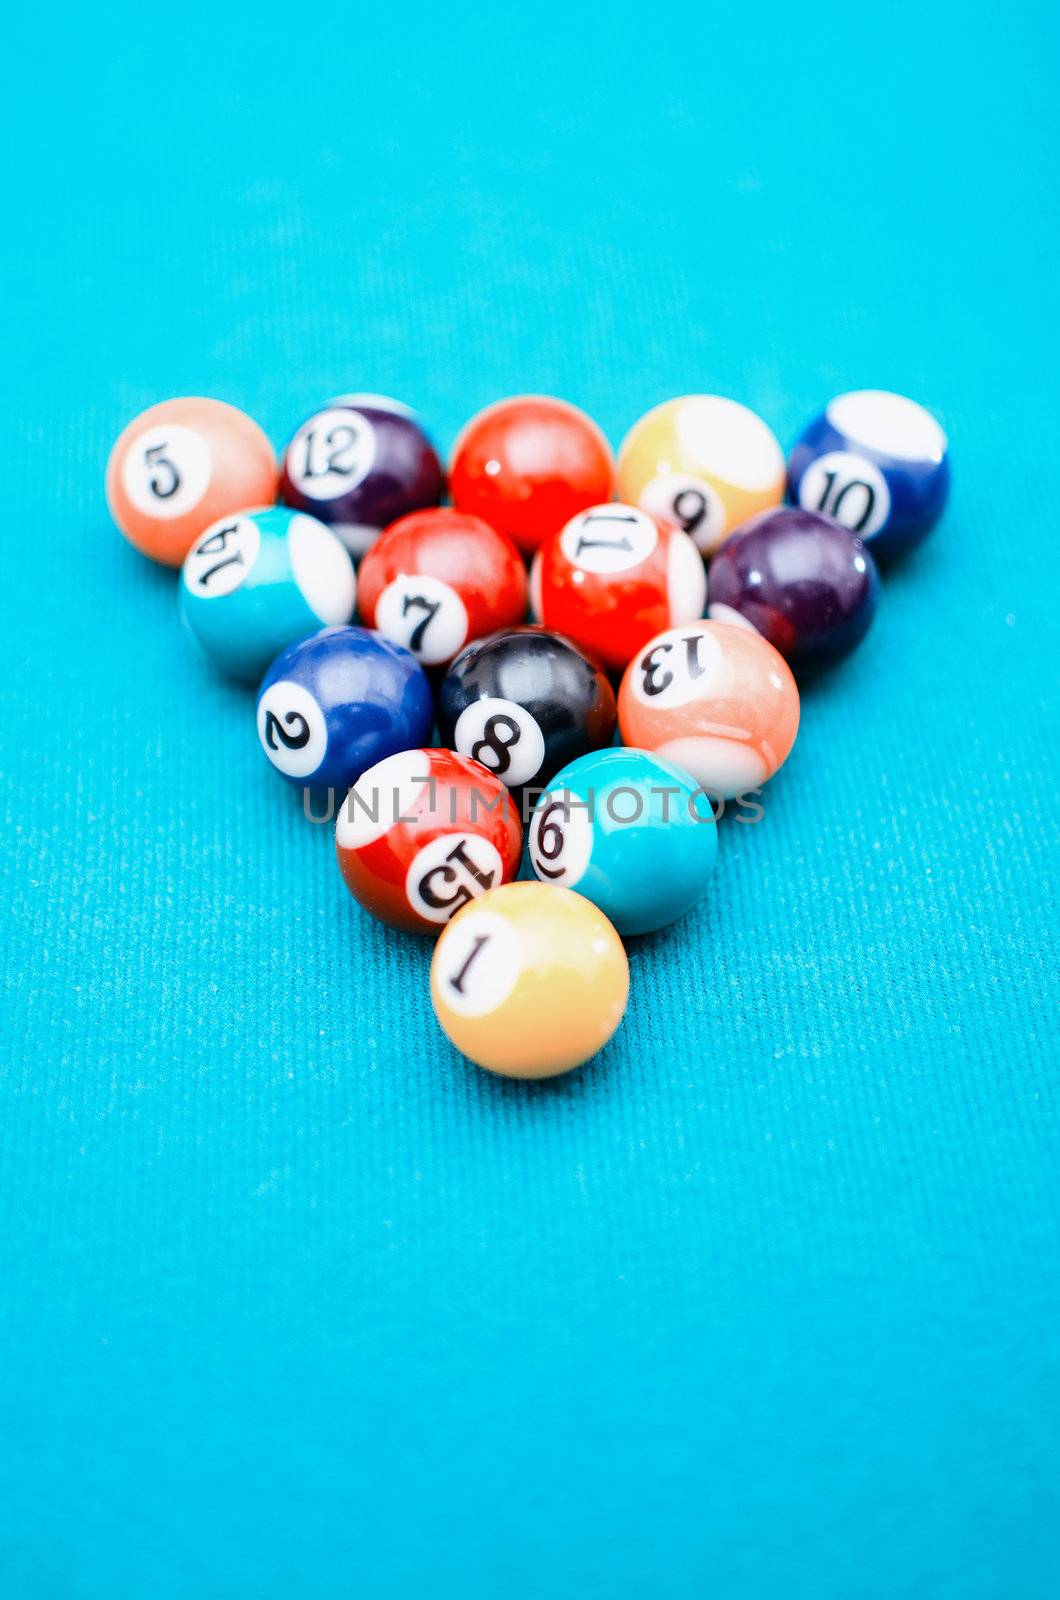 Pool game balls on blue felt table by dmitrimaruta